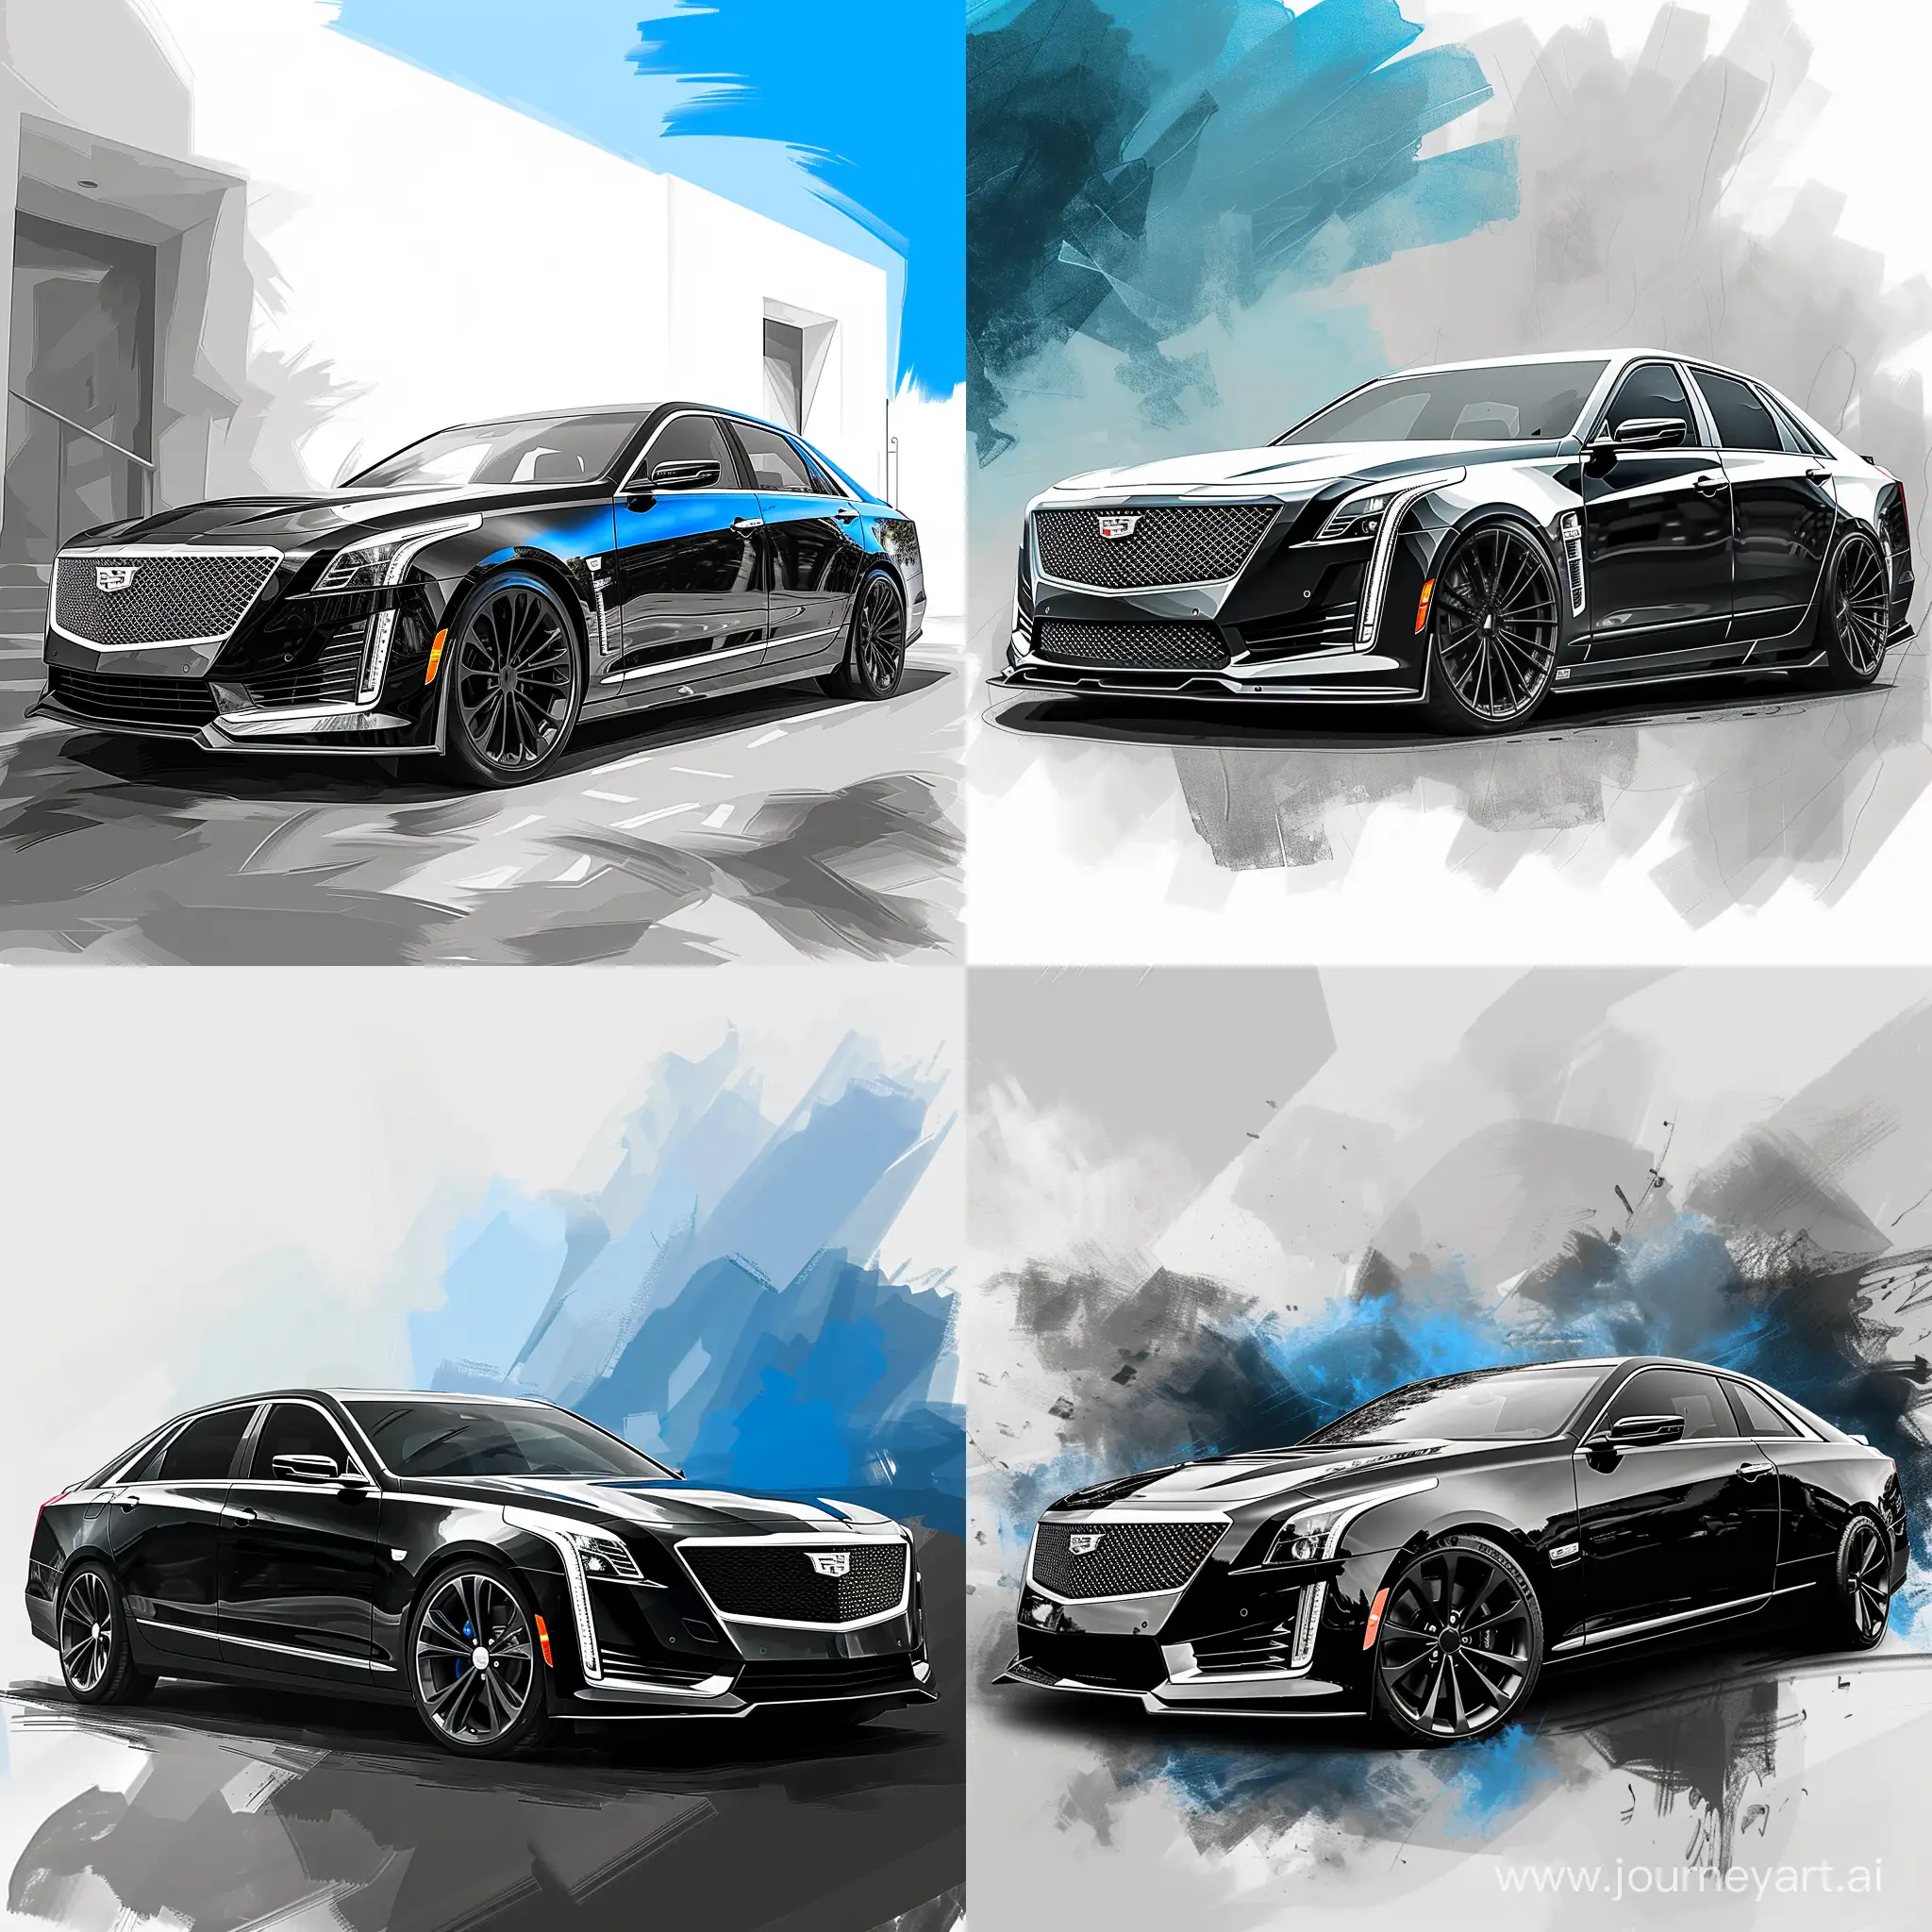 Modern-Cadillac-CTS-Digital-Painting-Minimalist-Car-Illustration-in-Black-and-Gray